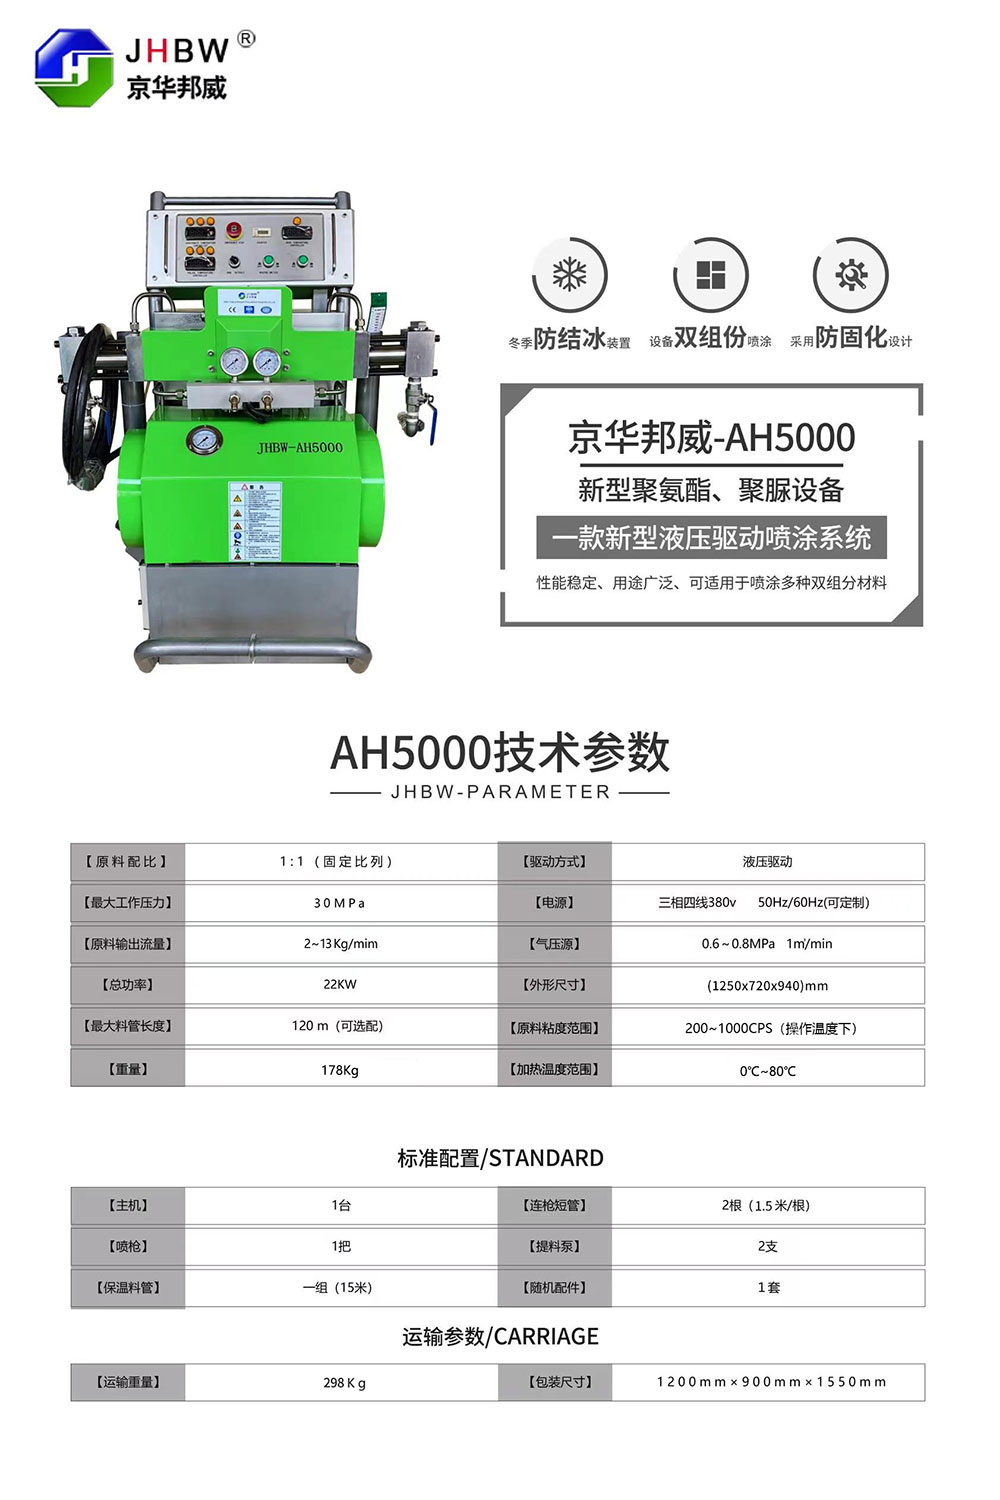 JHBW-AH5000聚氨酯喷涂设备